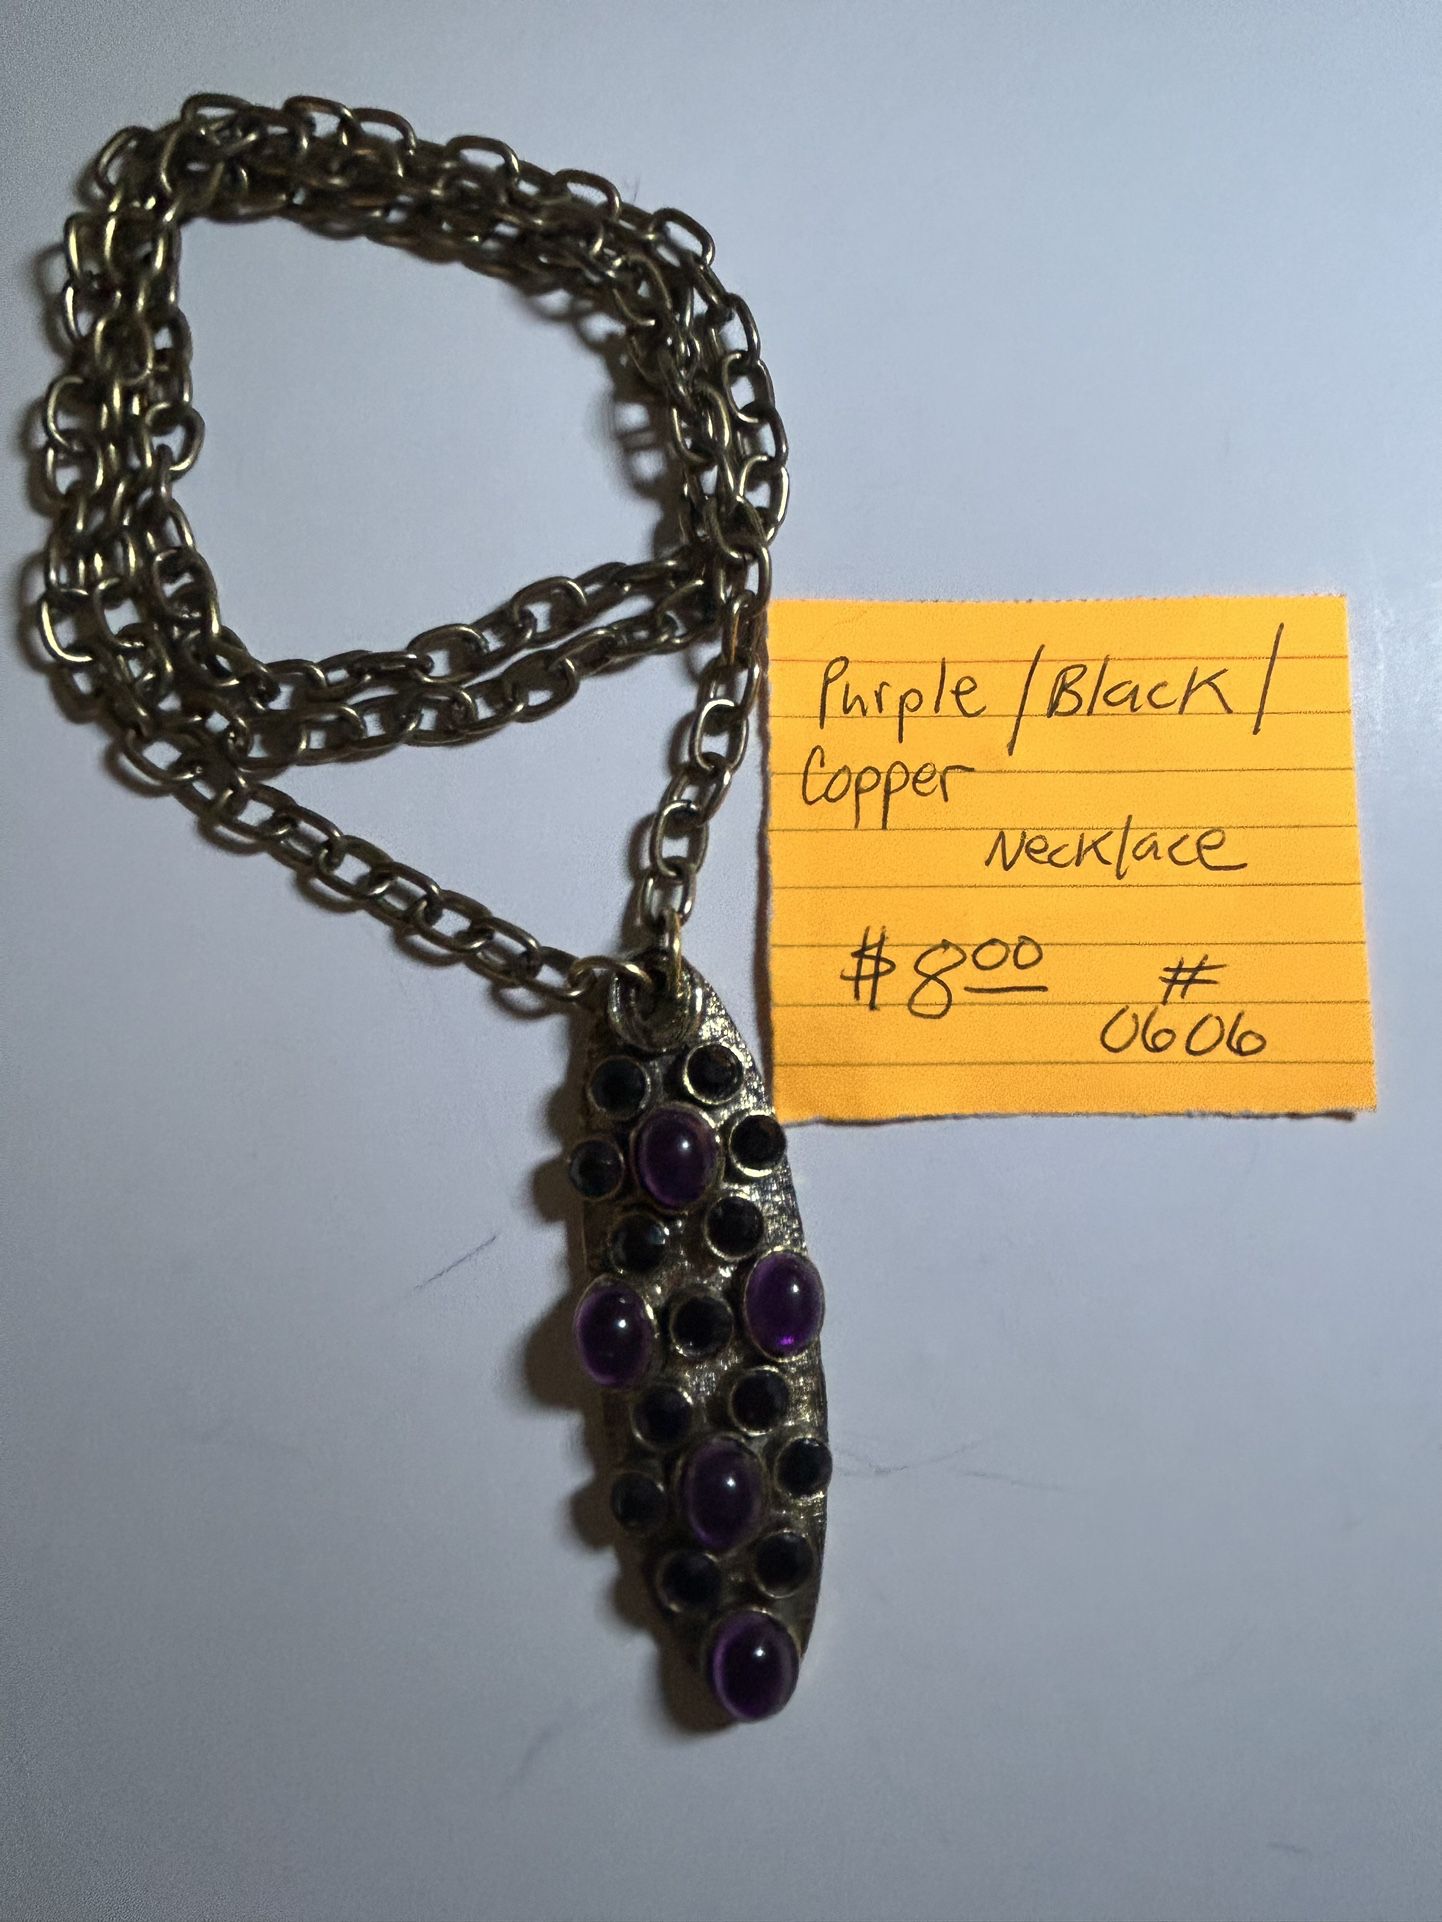 Purple Black Copper Necklace # 0606